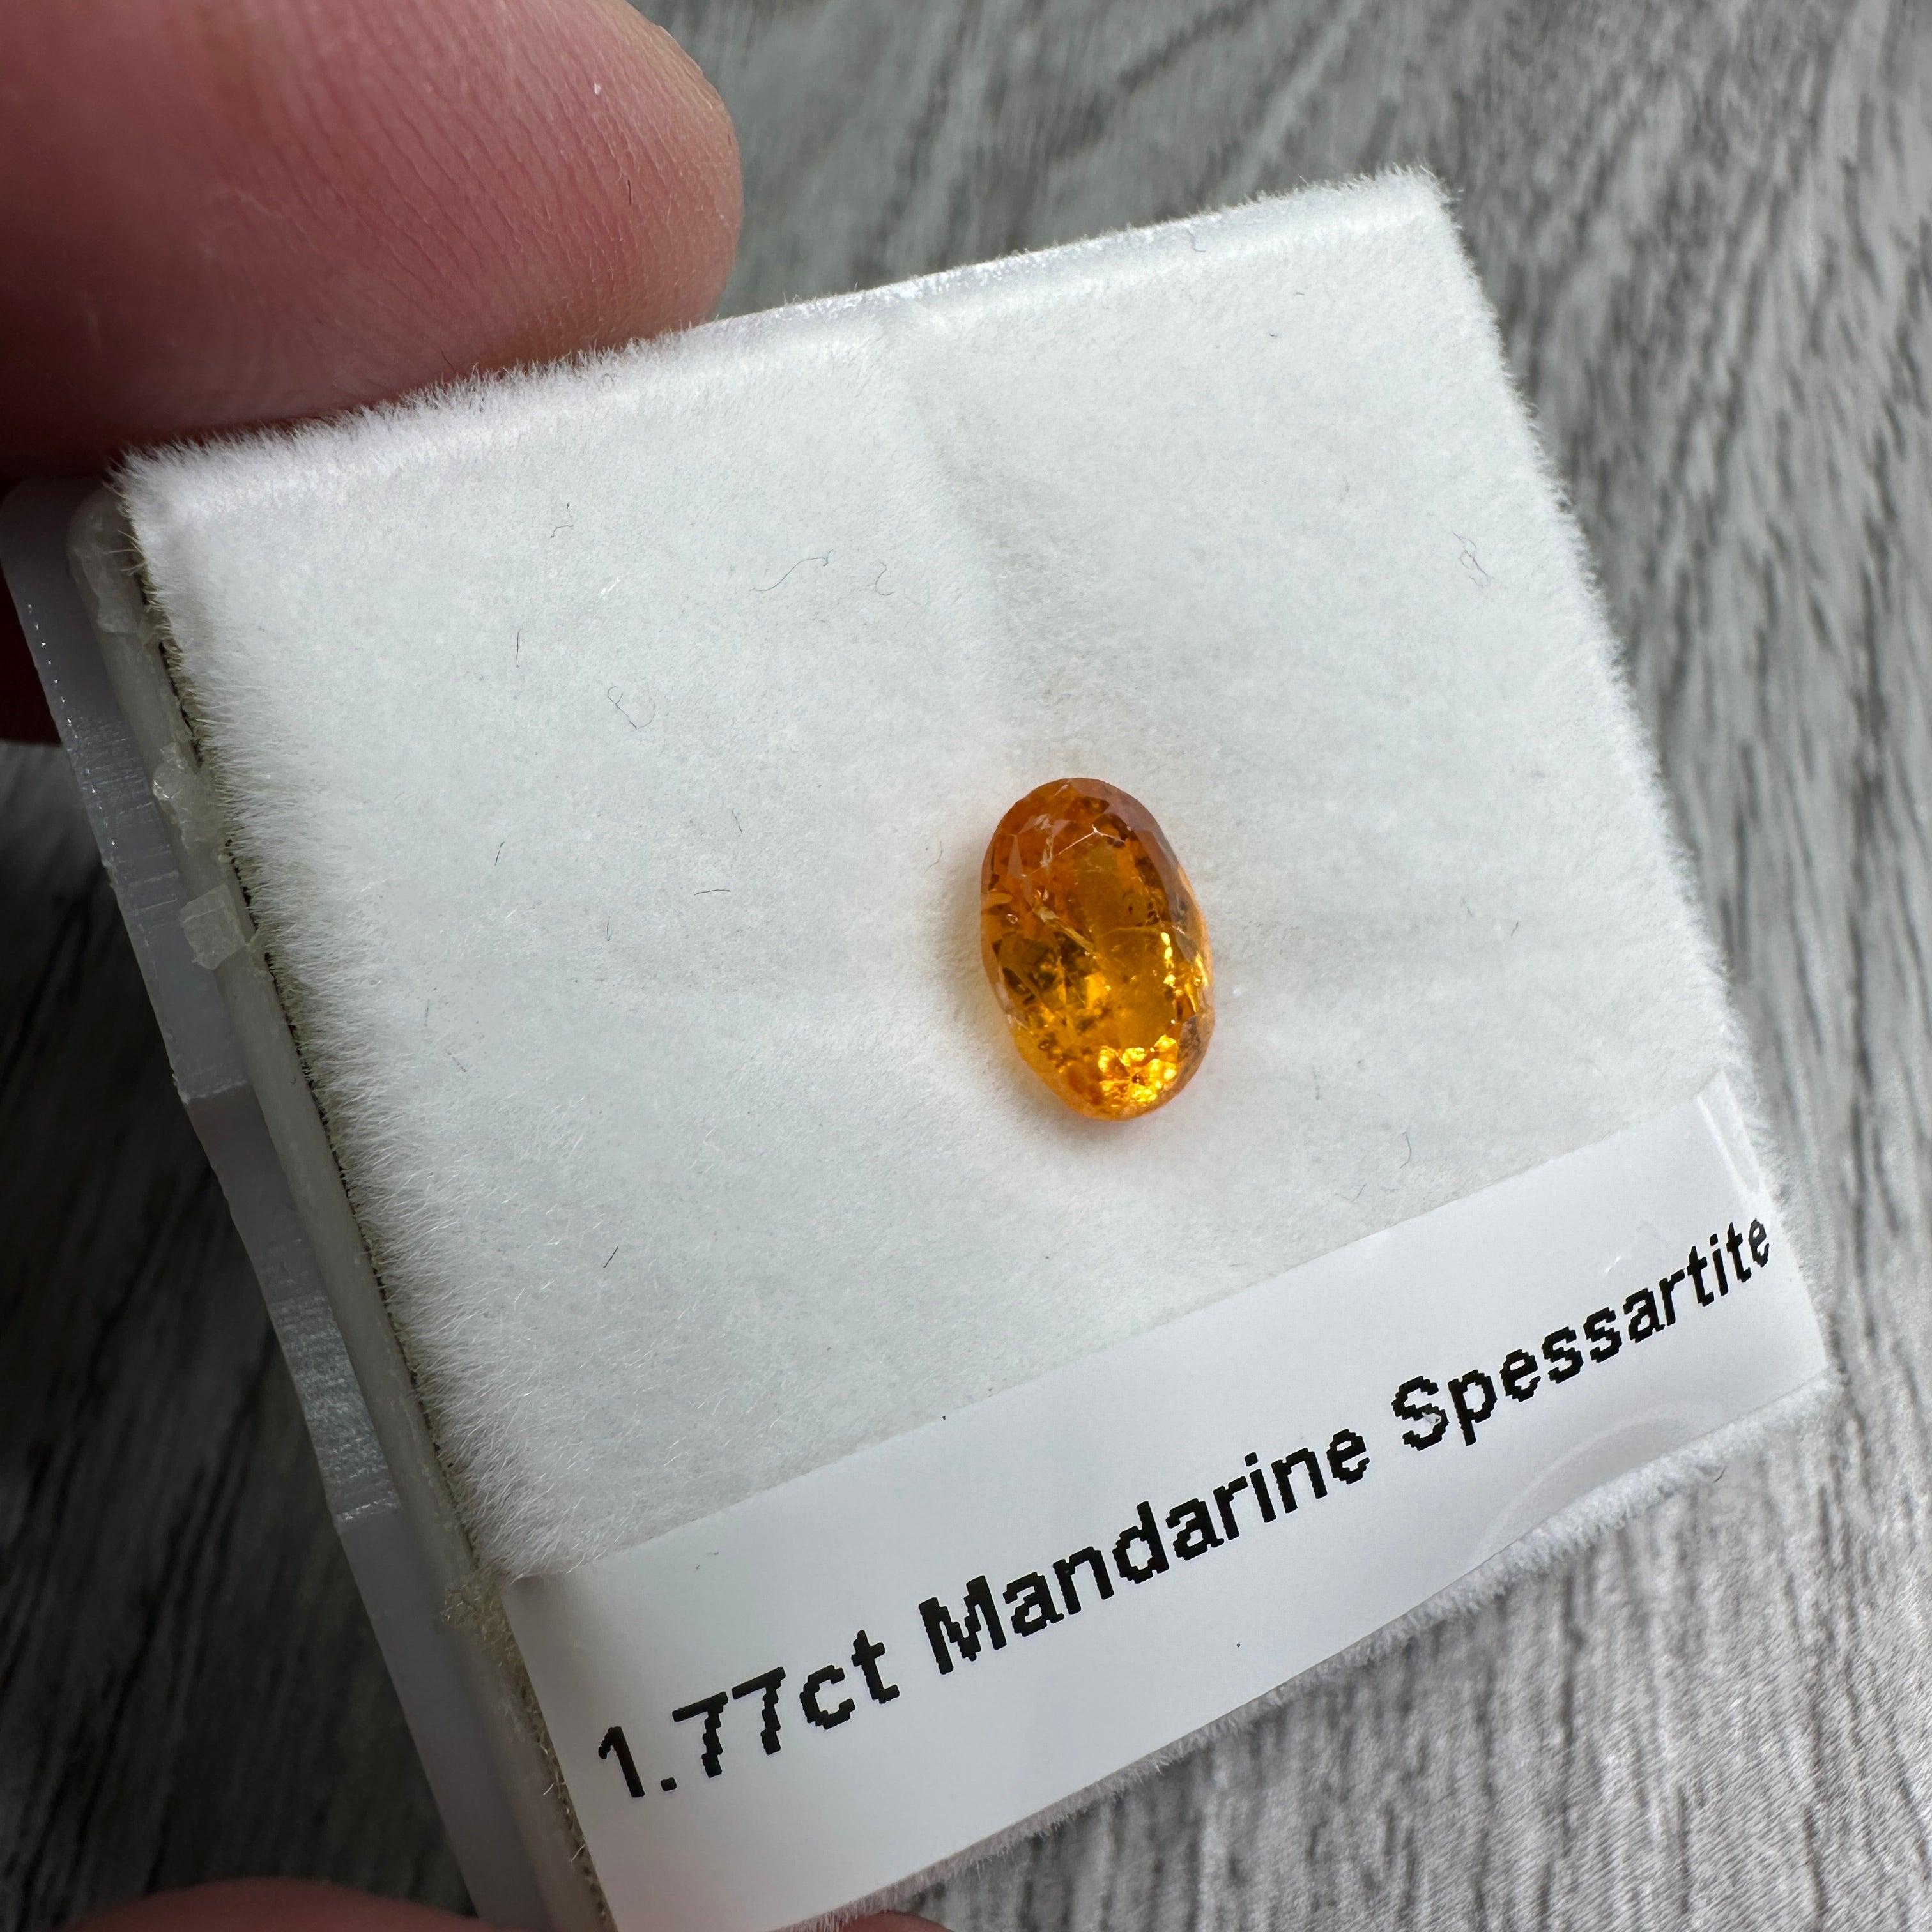 1.77ct Mandarin Spessartite Garnet, Loliondo, Tanzania, Untreated Unheated. Stone has a tiny crack across the crown and table